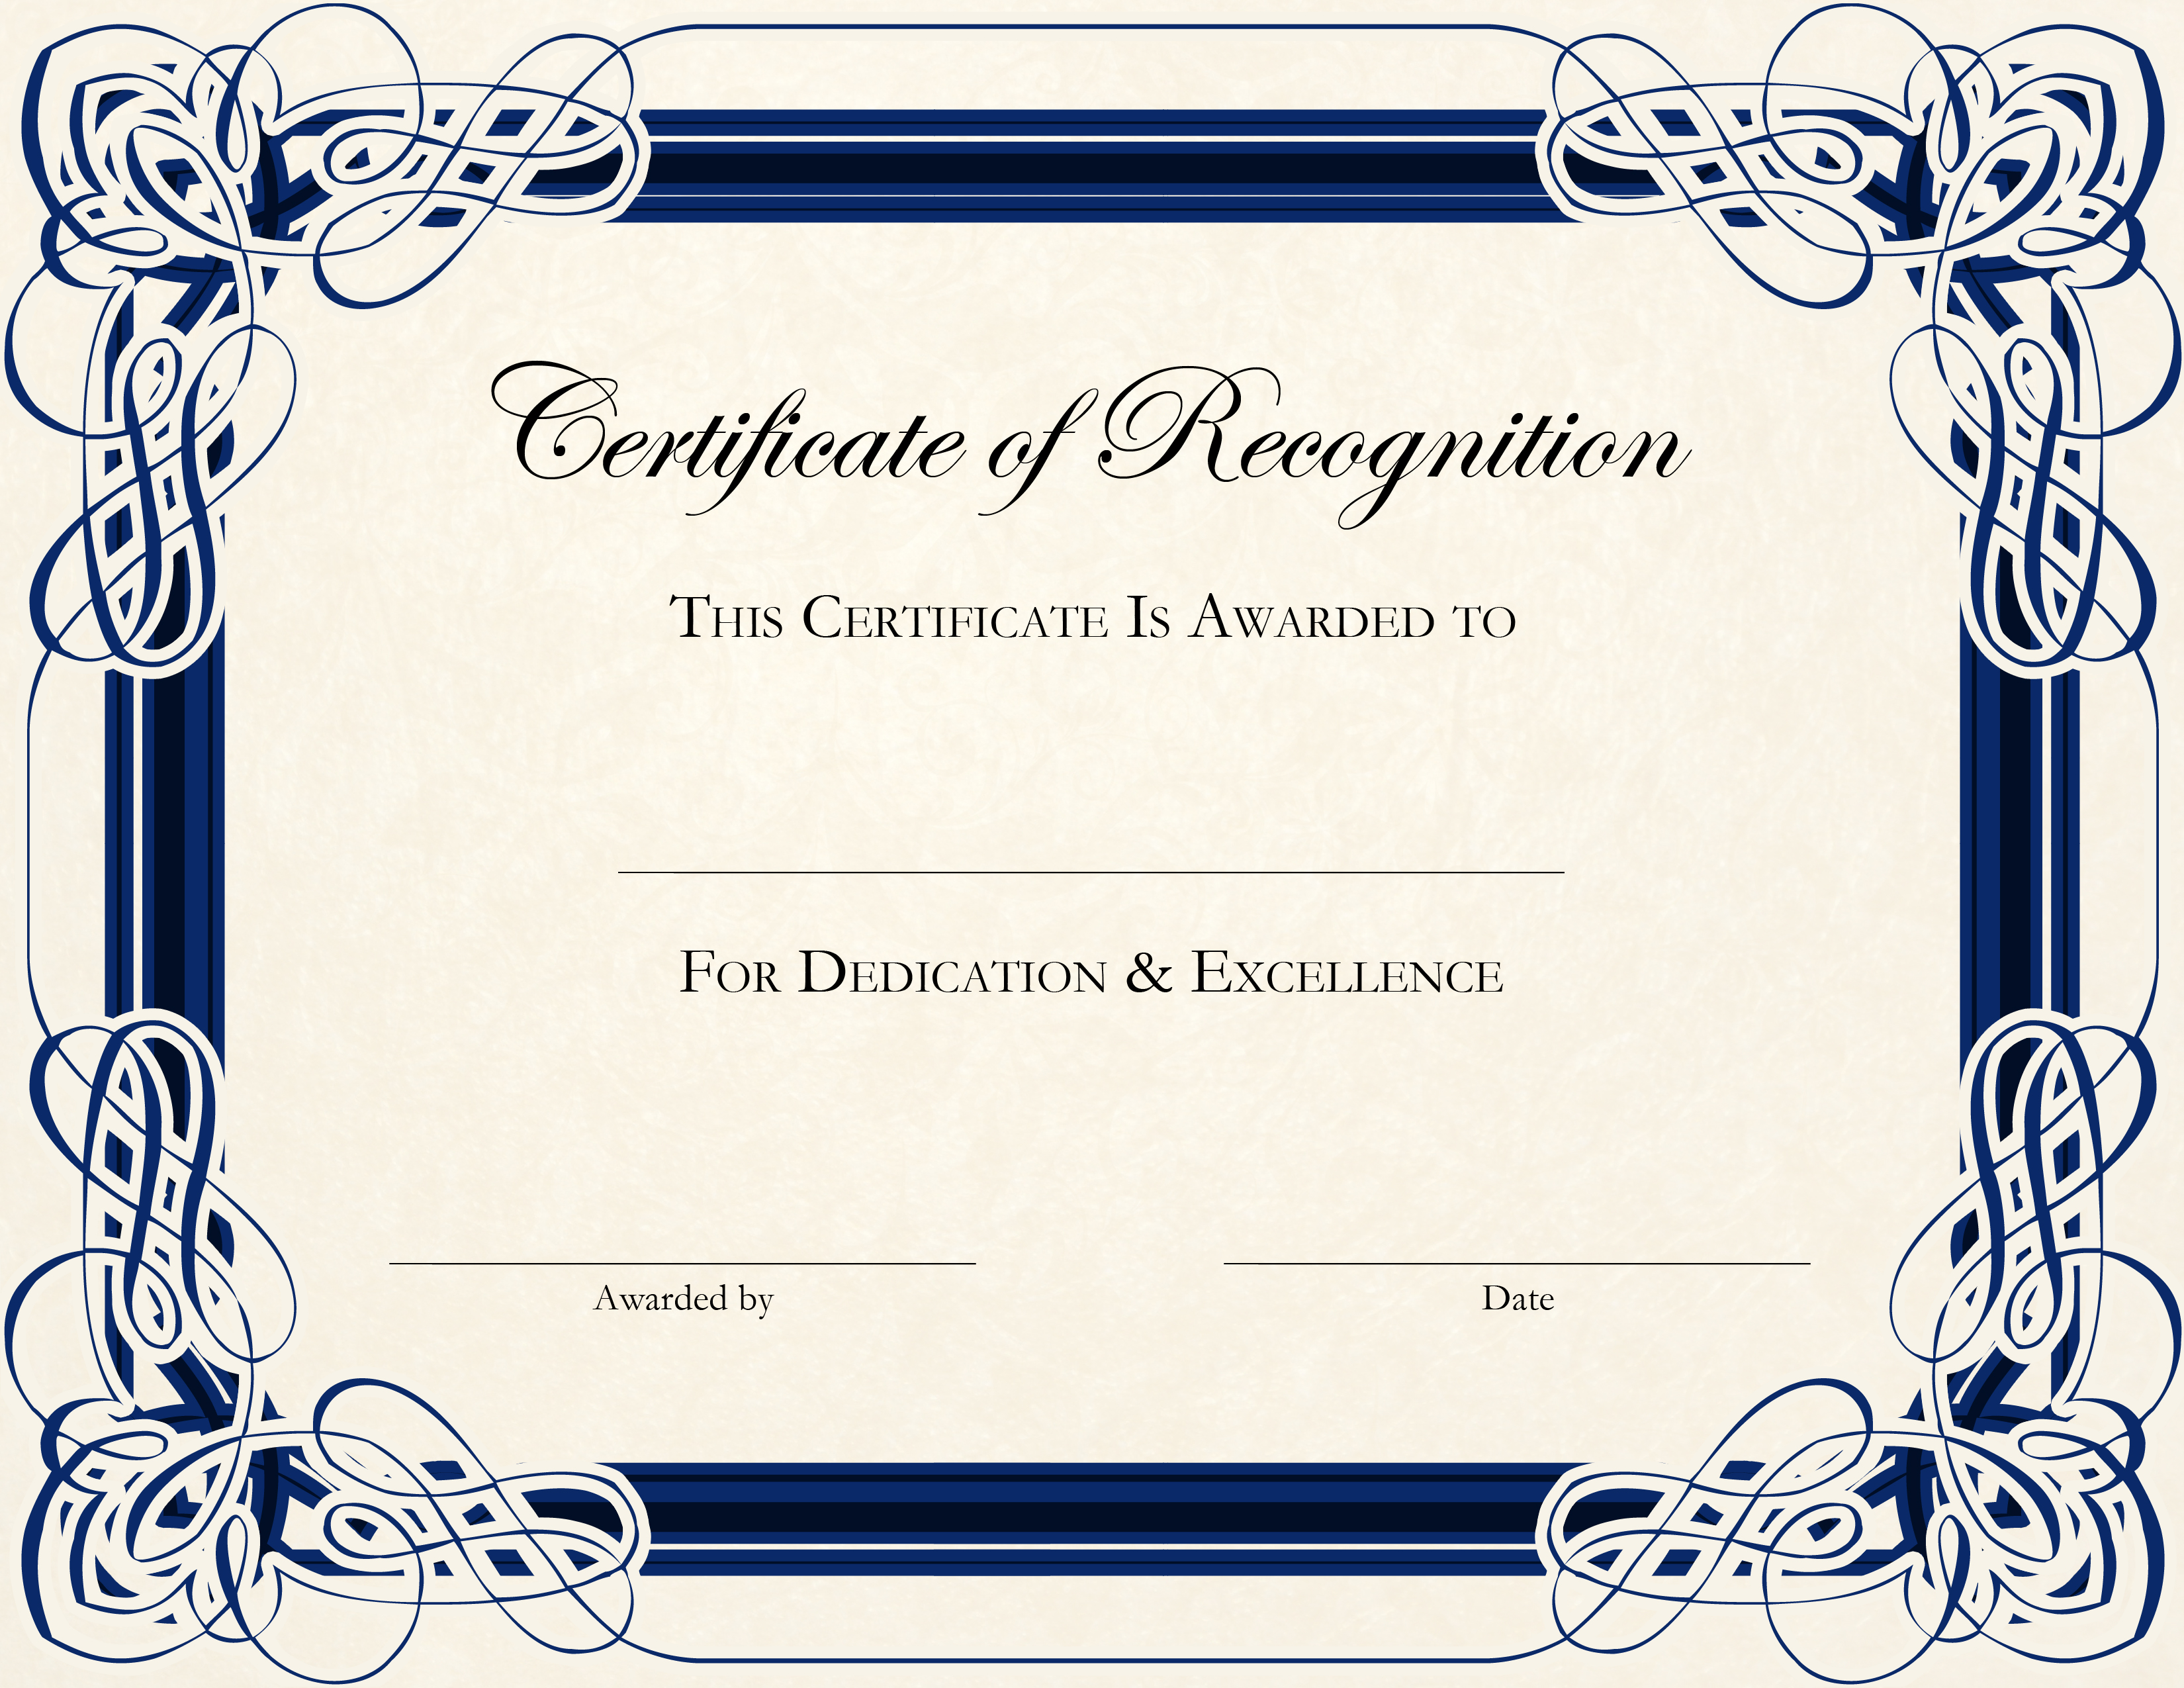 Certificate Of Appreciation Template | Best Business Template